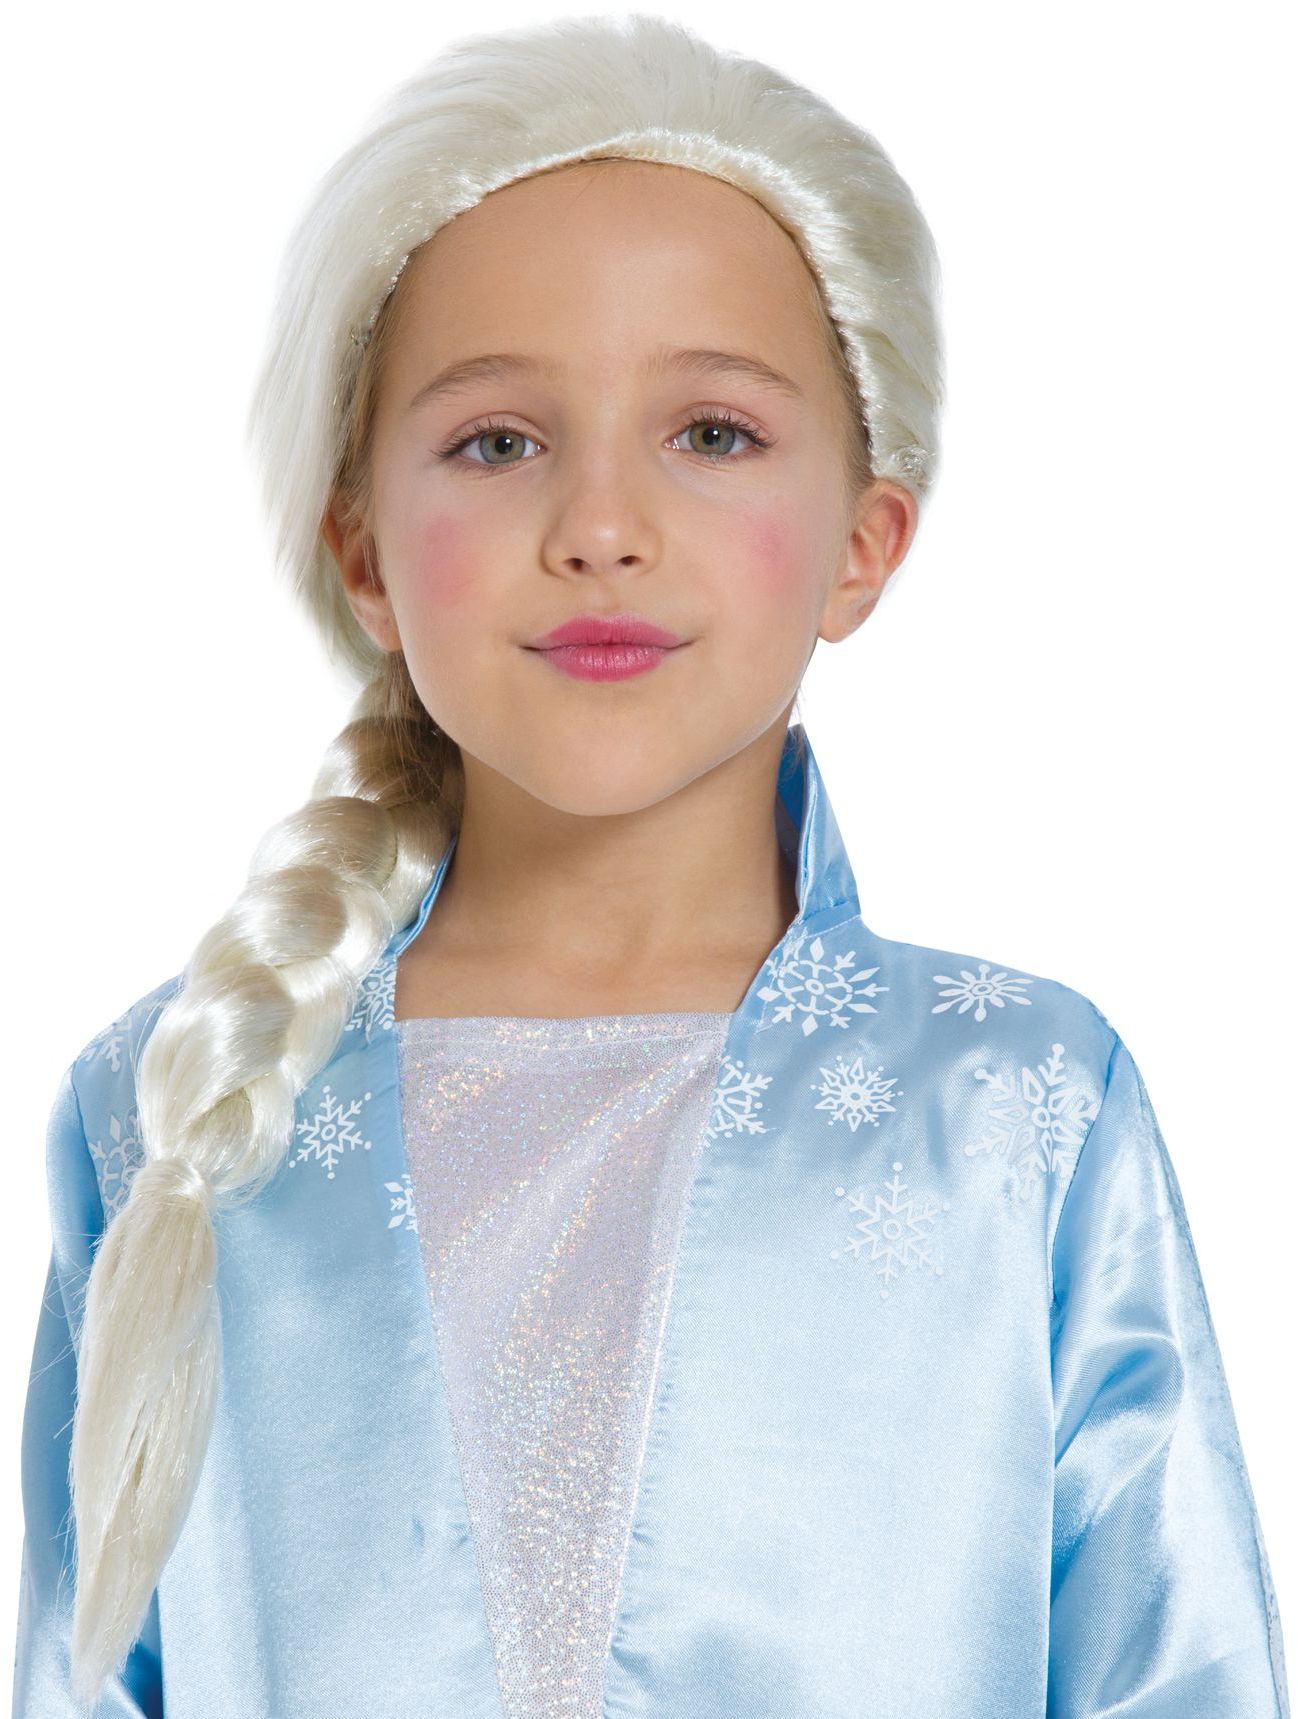 Frozen Elsa pruik blond kind